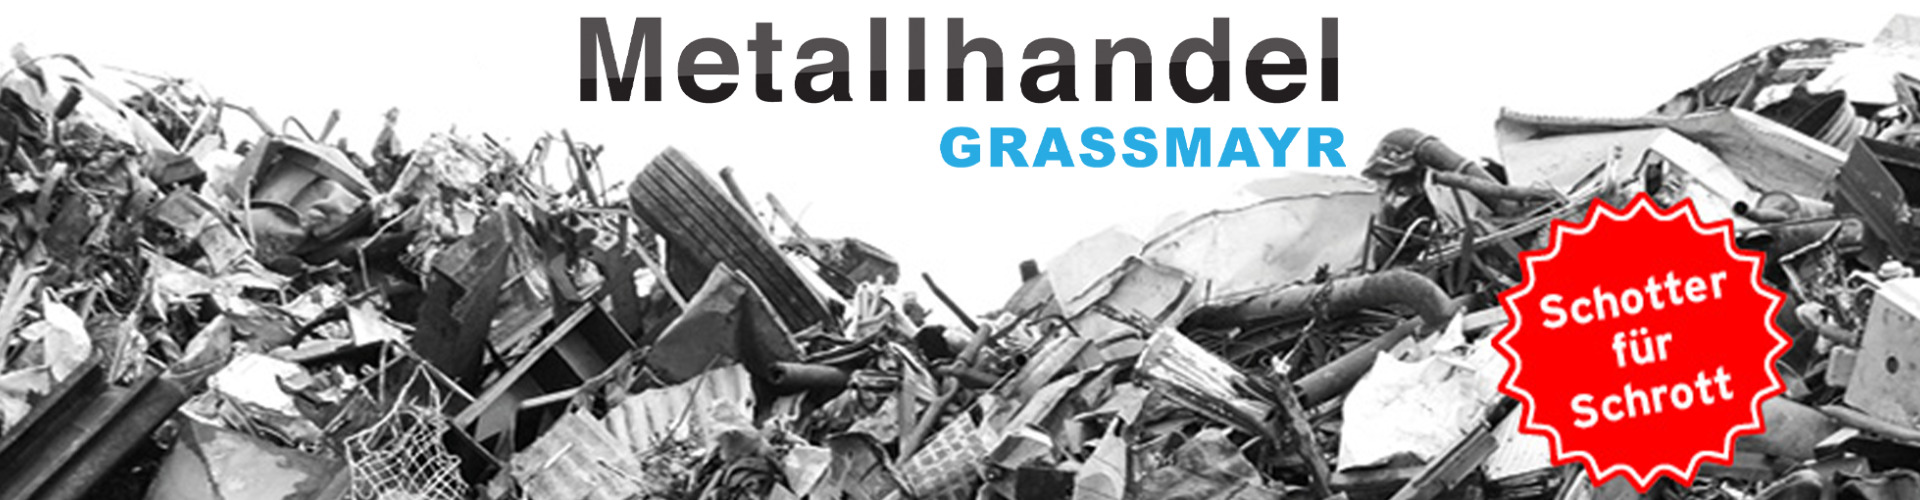 Johann Grassmayr Metallhandel GmbH cover